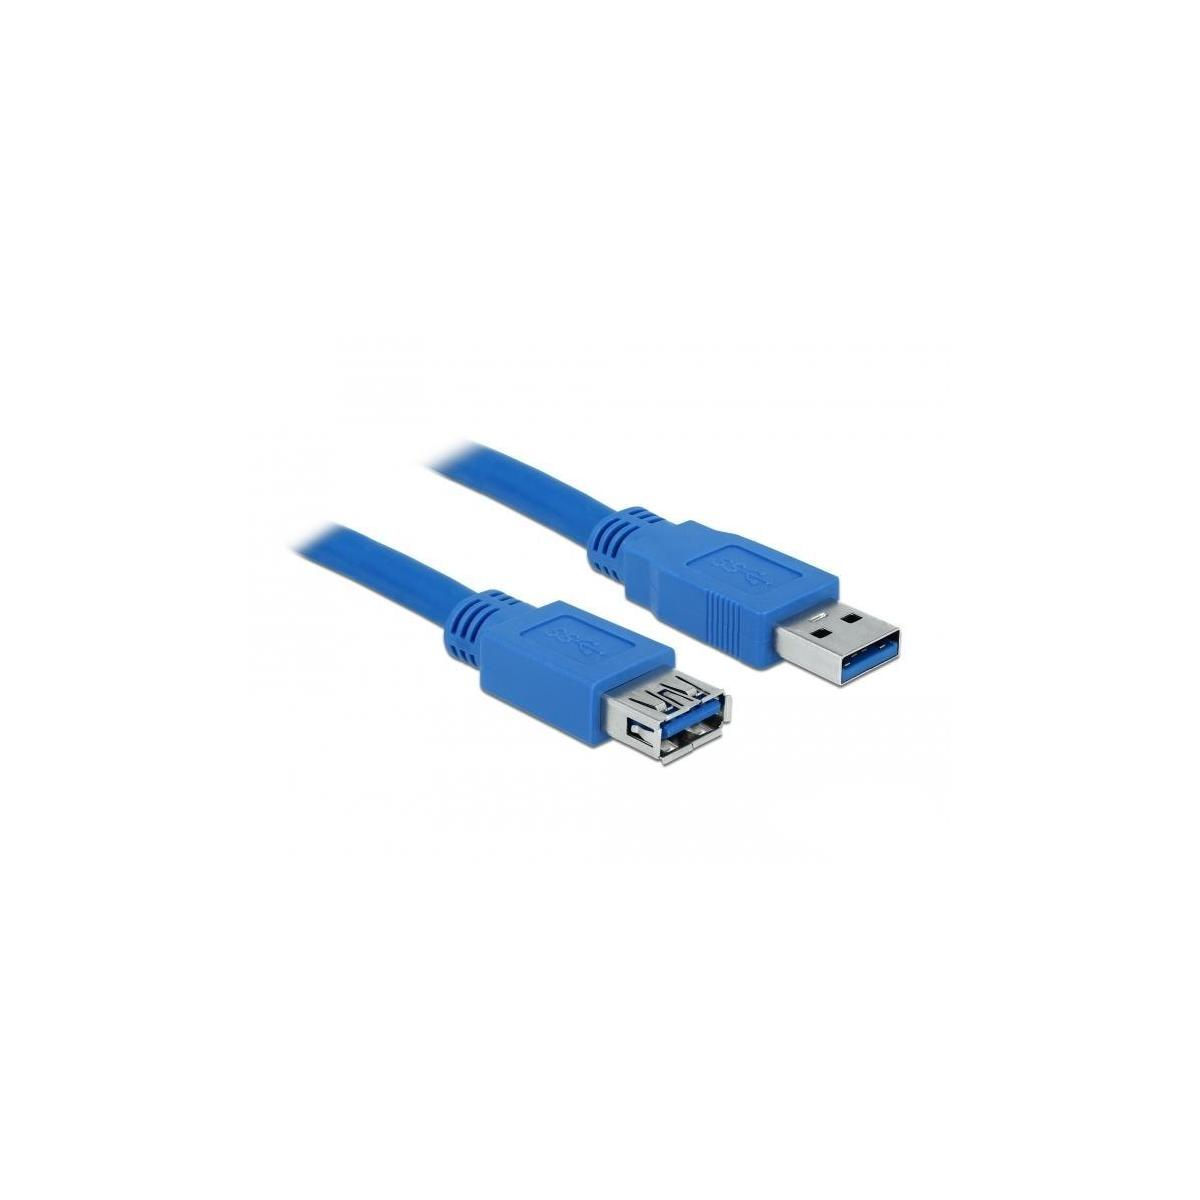 DELOCK DELOCK Kabel USB 3.0 mehrfarbig 3mSt/B A/A Kabel, & Peripheriegeräte Verlaeng Zubehör USB